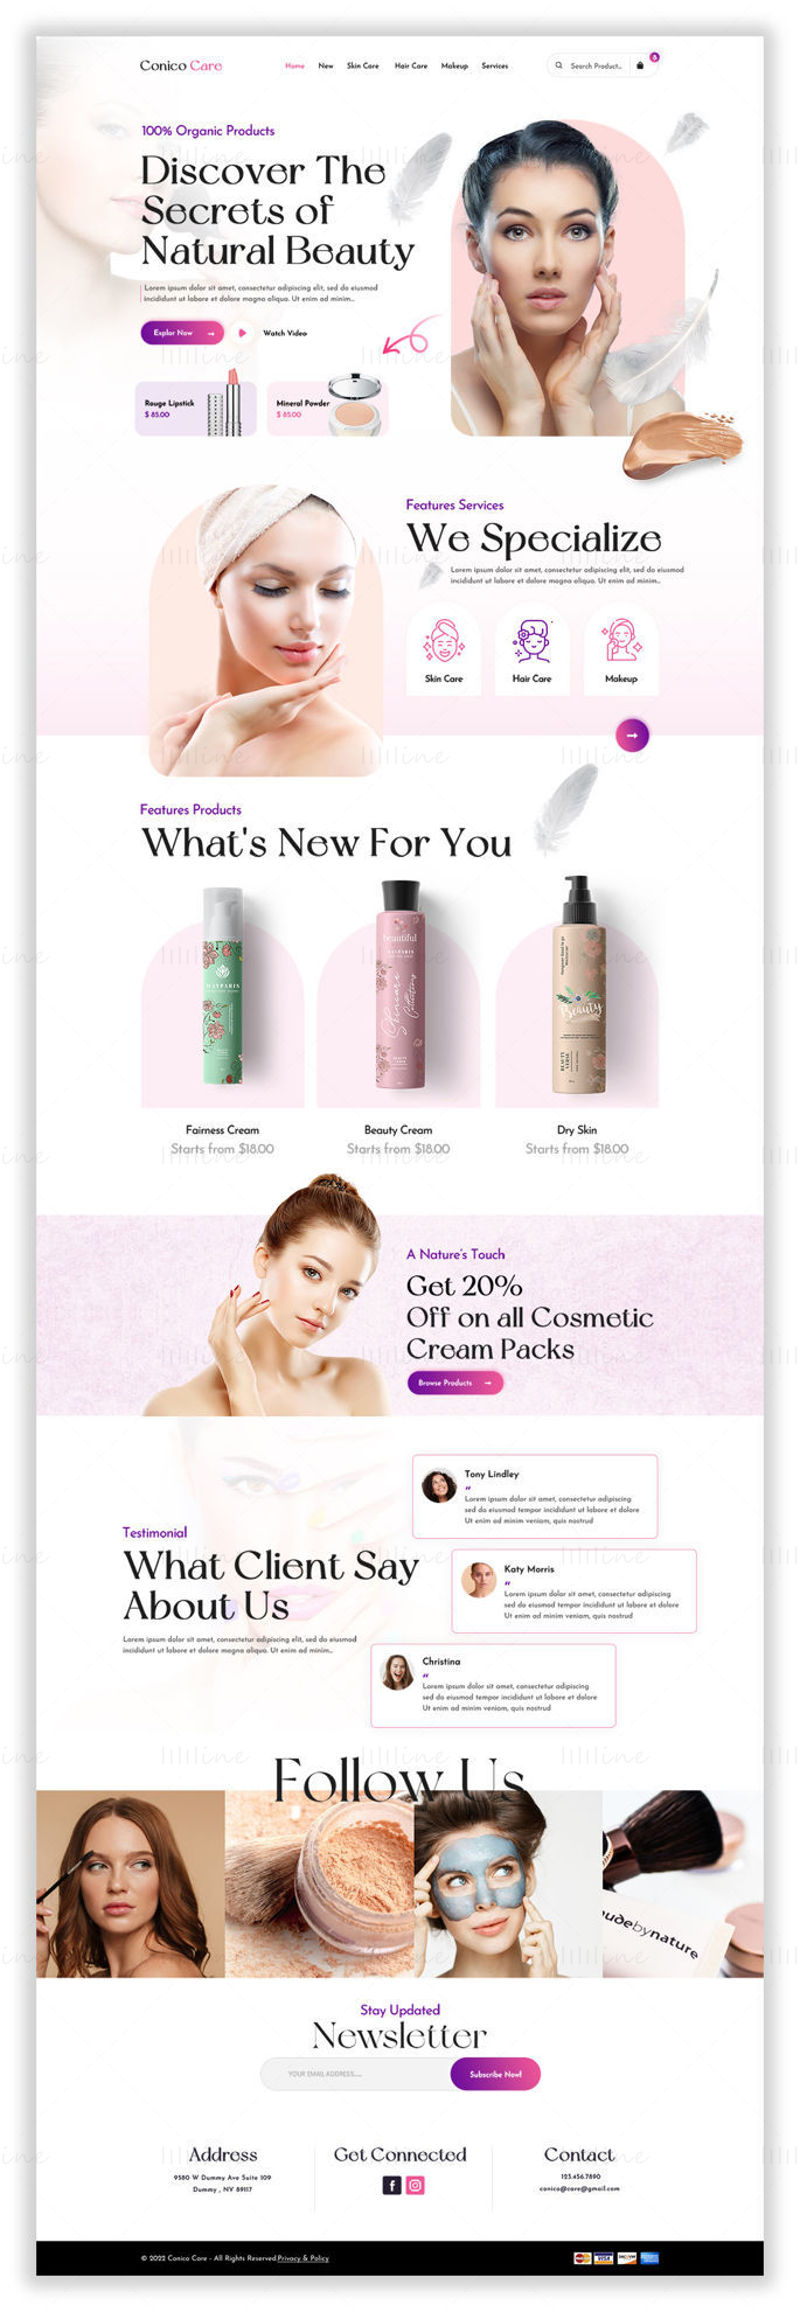 Conico-Care Cosmetic & Skin Care Hjemmeside - UI Adobe Photoshop